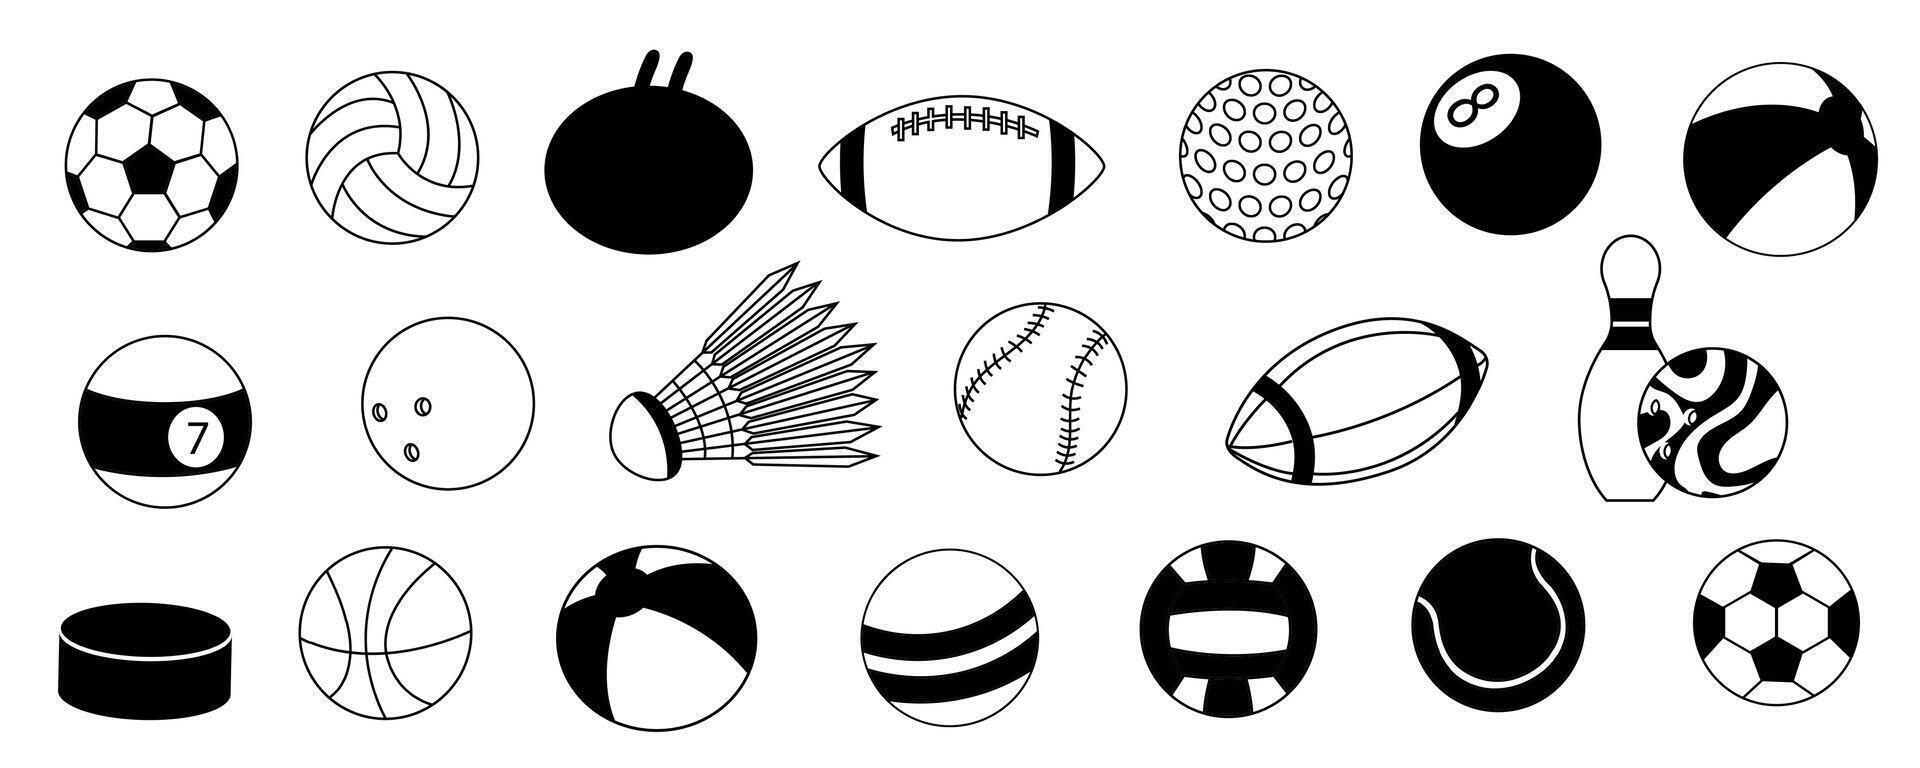 sport Balle Icônes. dessin animé Jeu Balle silhouette plat style, Football base-ball streetball et volley-ball noir symboles. vecteur isolé collection